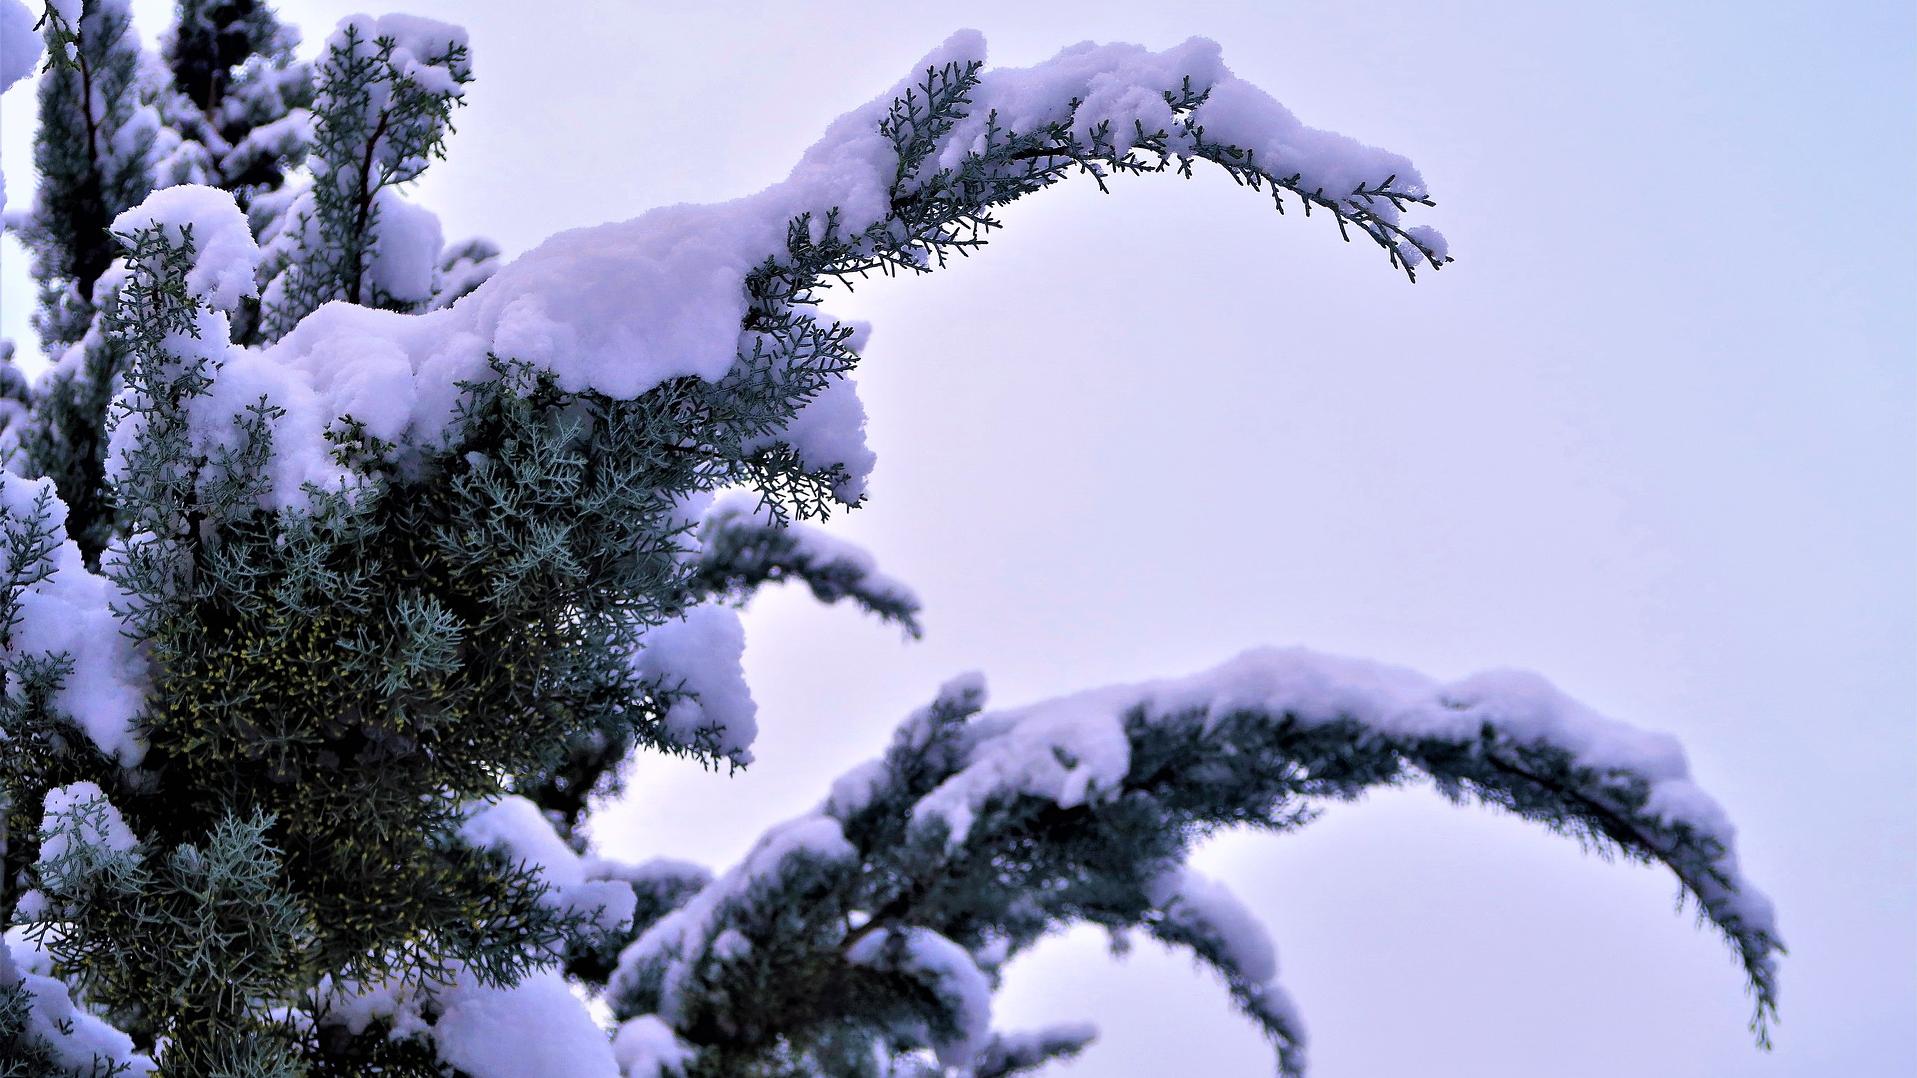 Winter Schnee Wald Pixabay.com